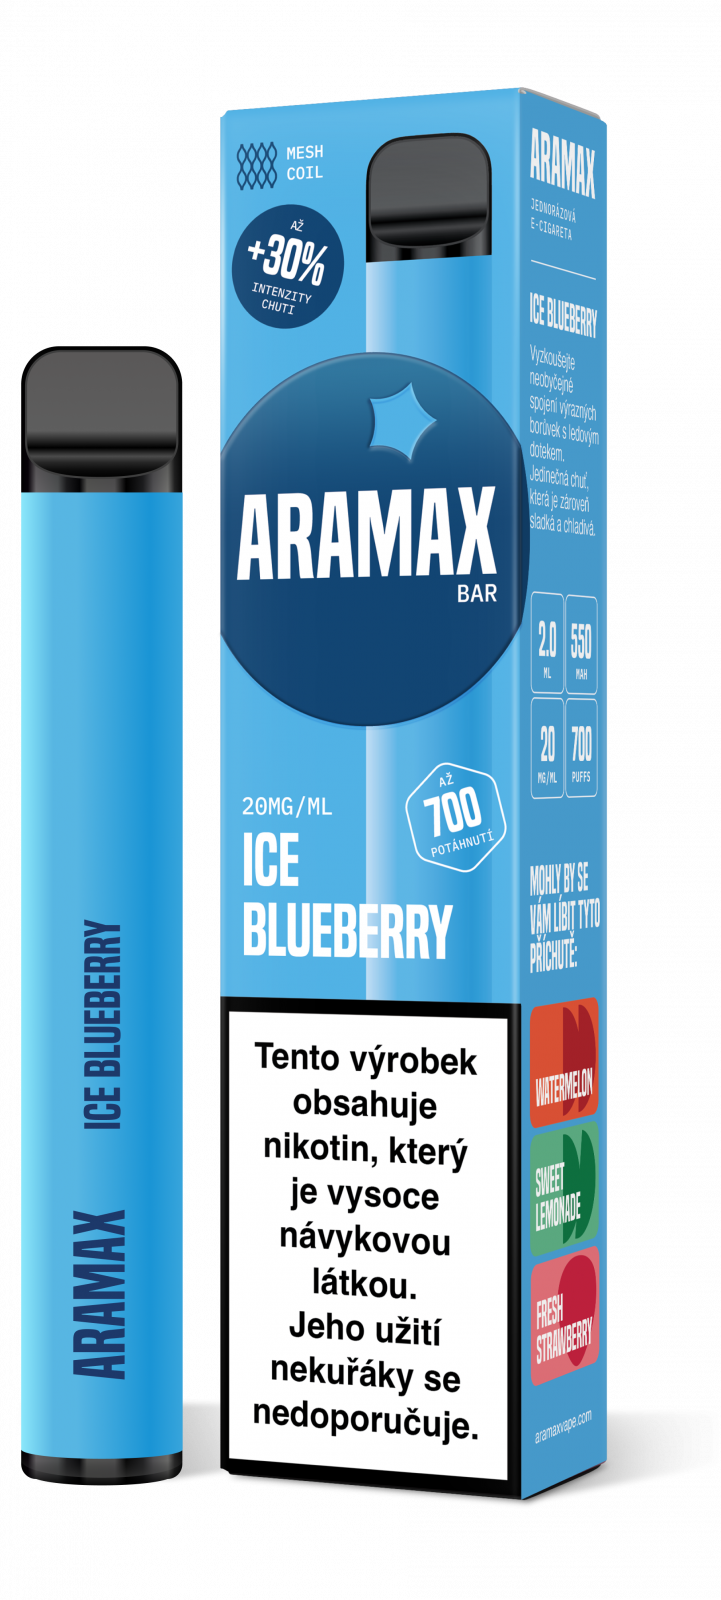 ICE BLUEBERRY 20mg/ml - Aramax Bar 700